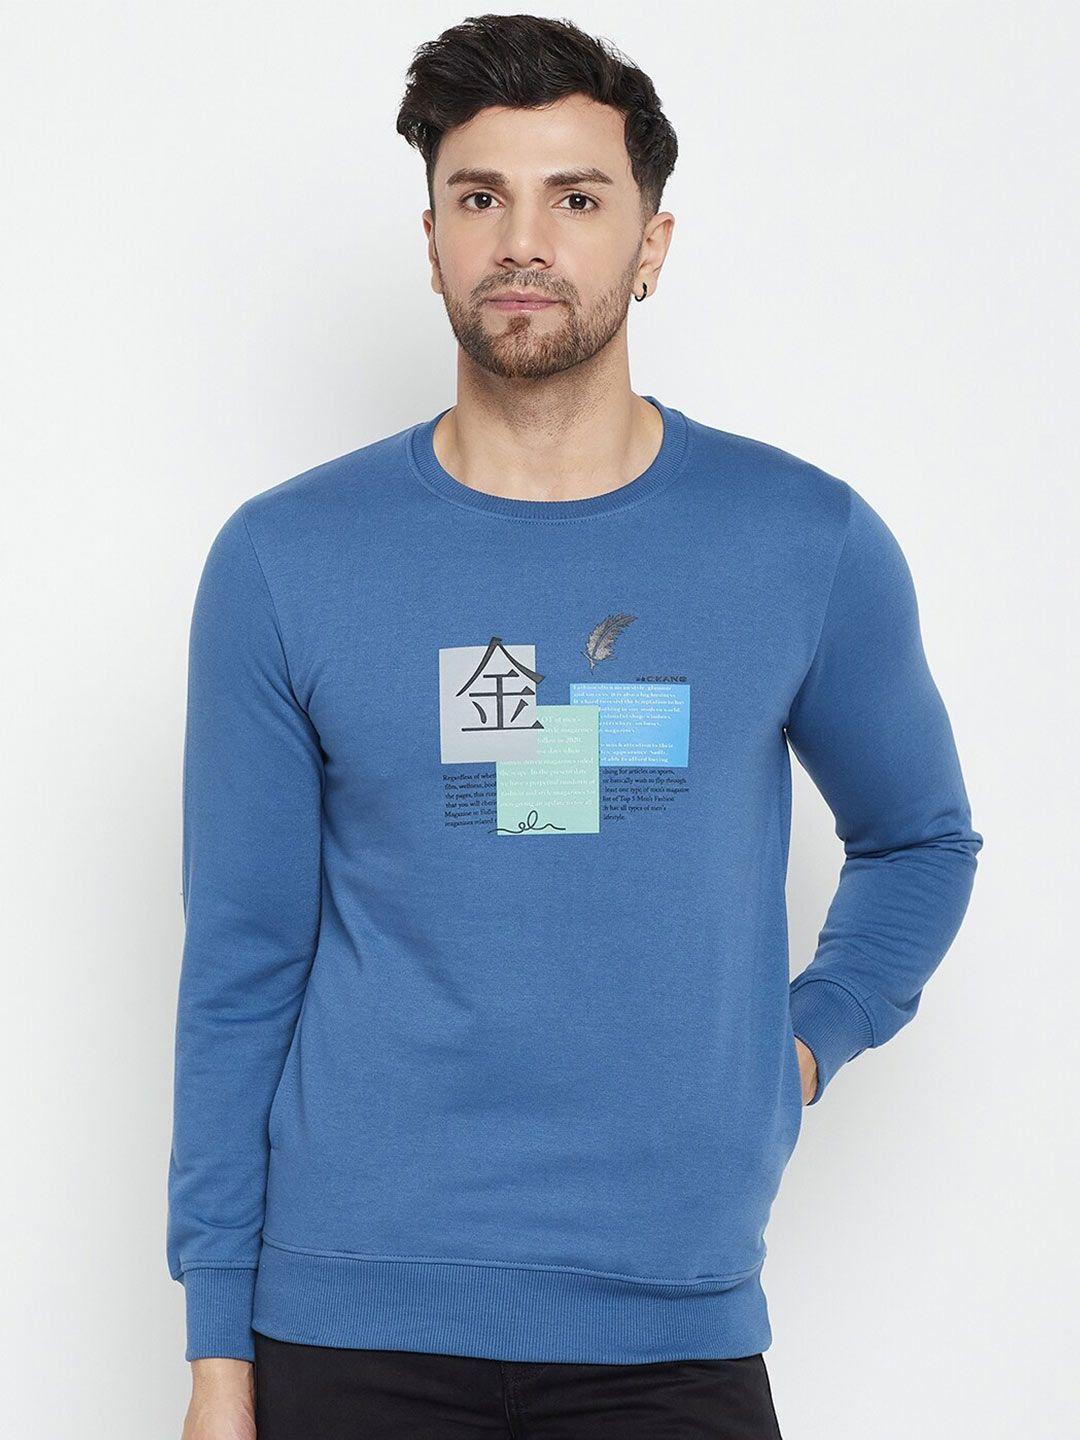 okane typography printed pullover cotton sweatshirt